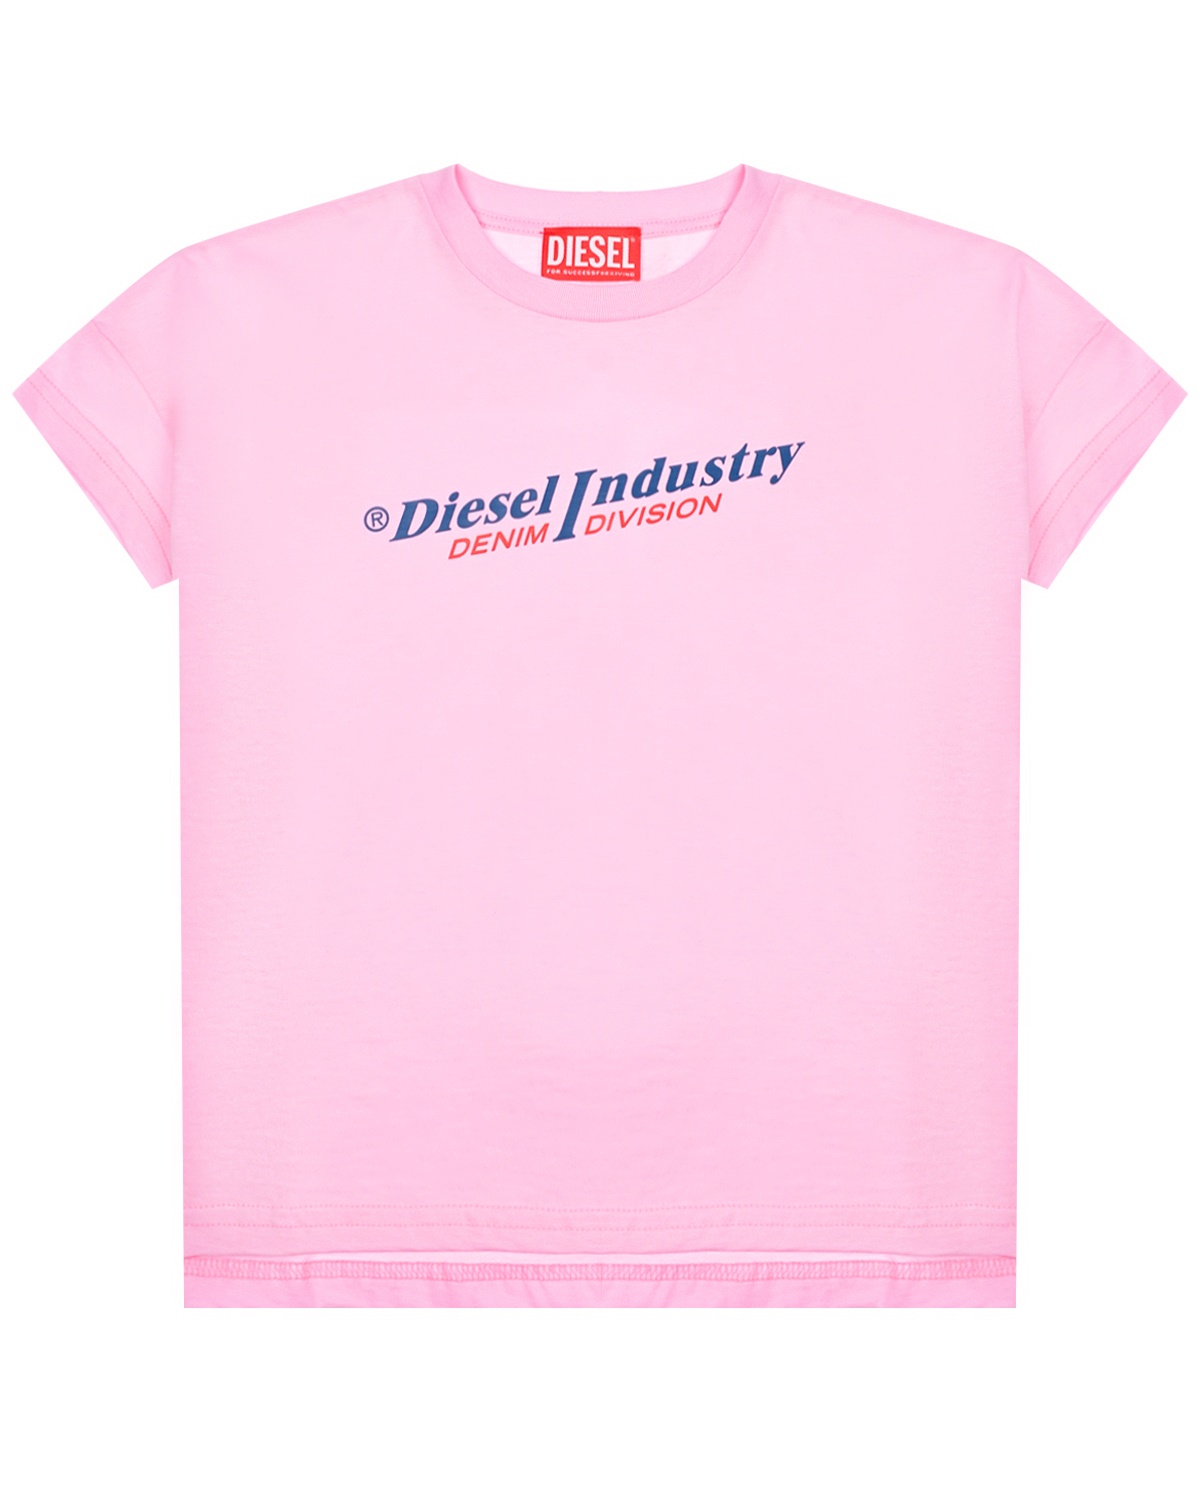 Розовая футболка с лого Diesel футболка трикотажная зария розовая